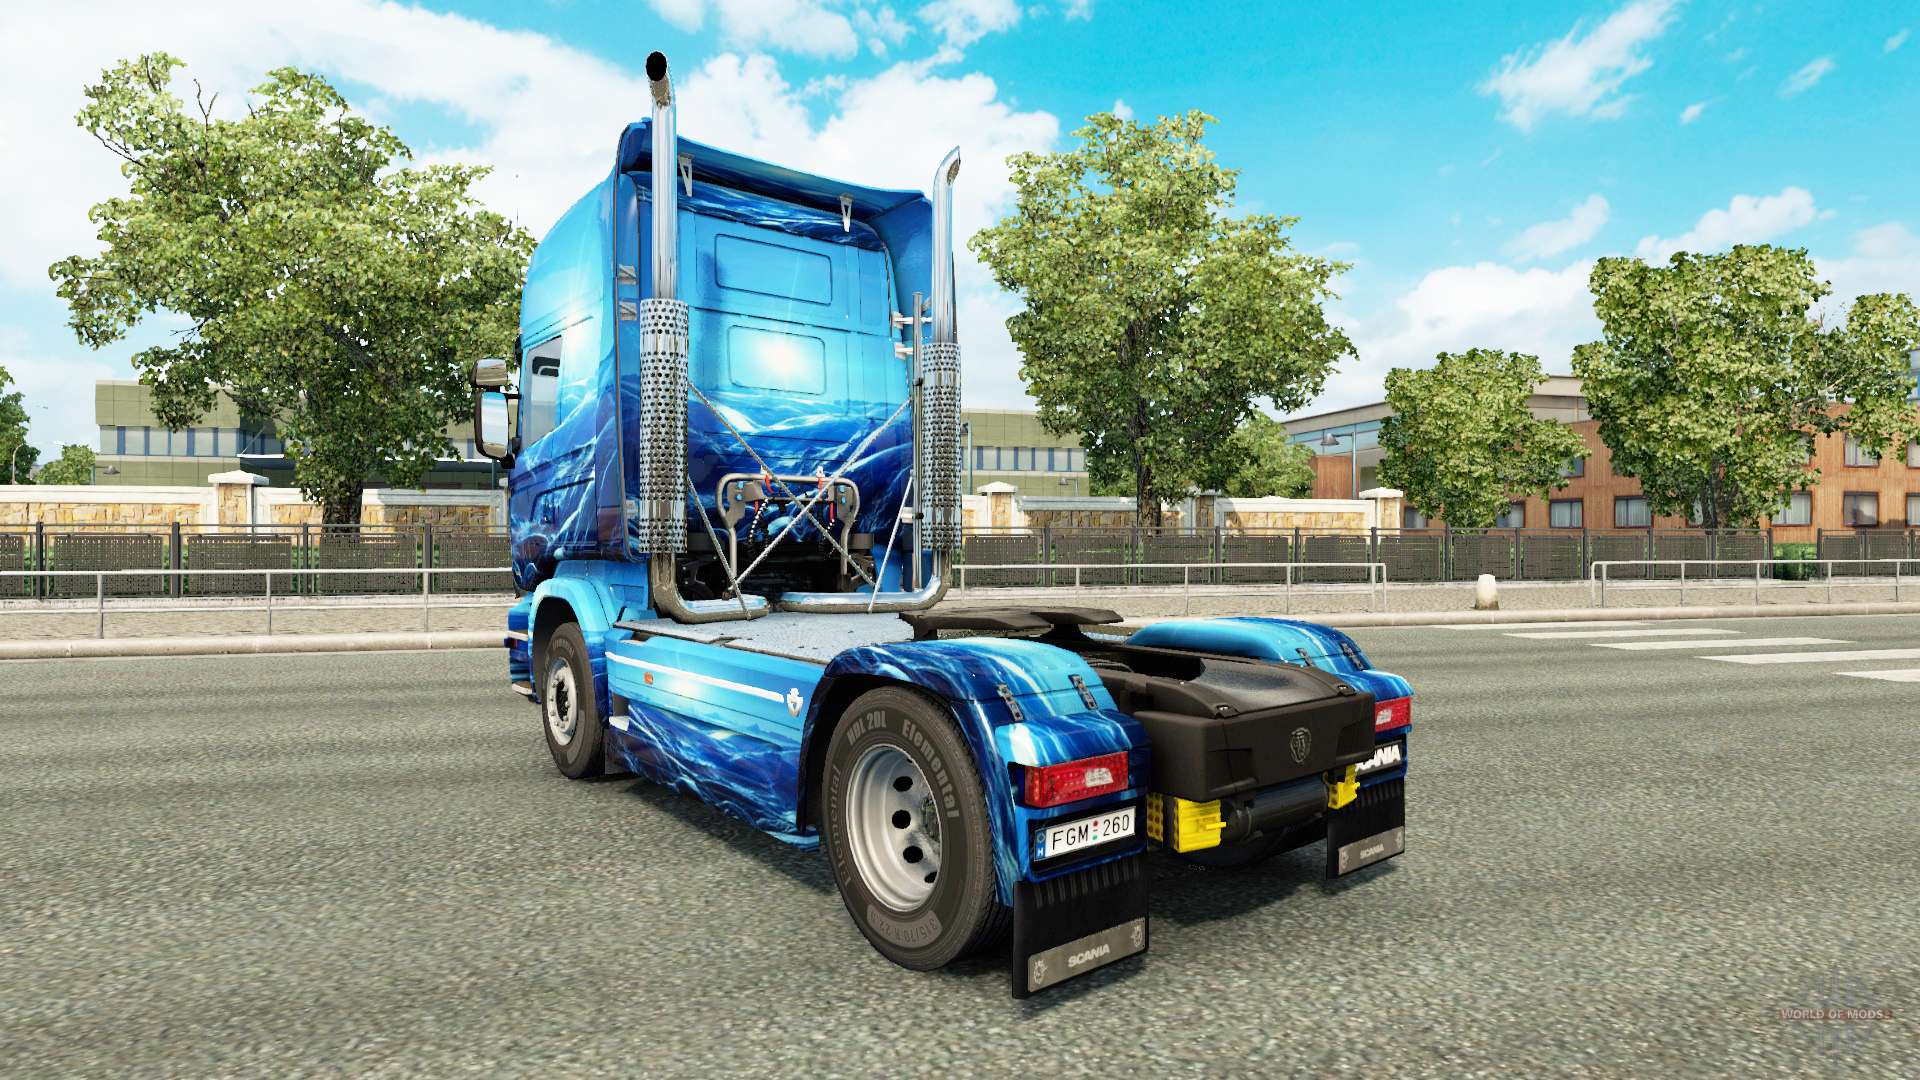 Light Blue skin for the truck Scania for Euro Truck Simulator 2